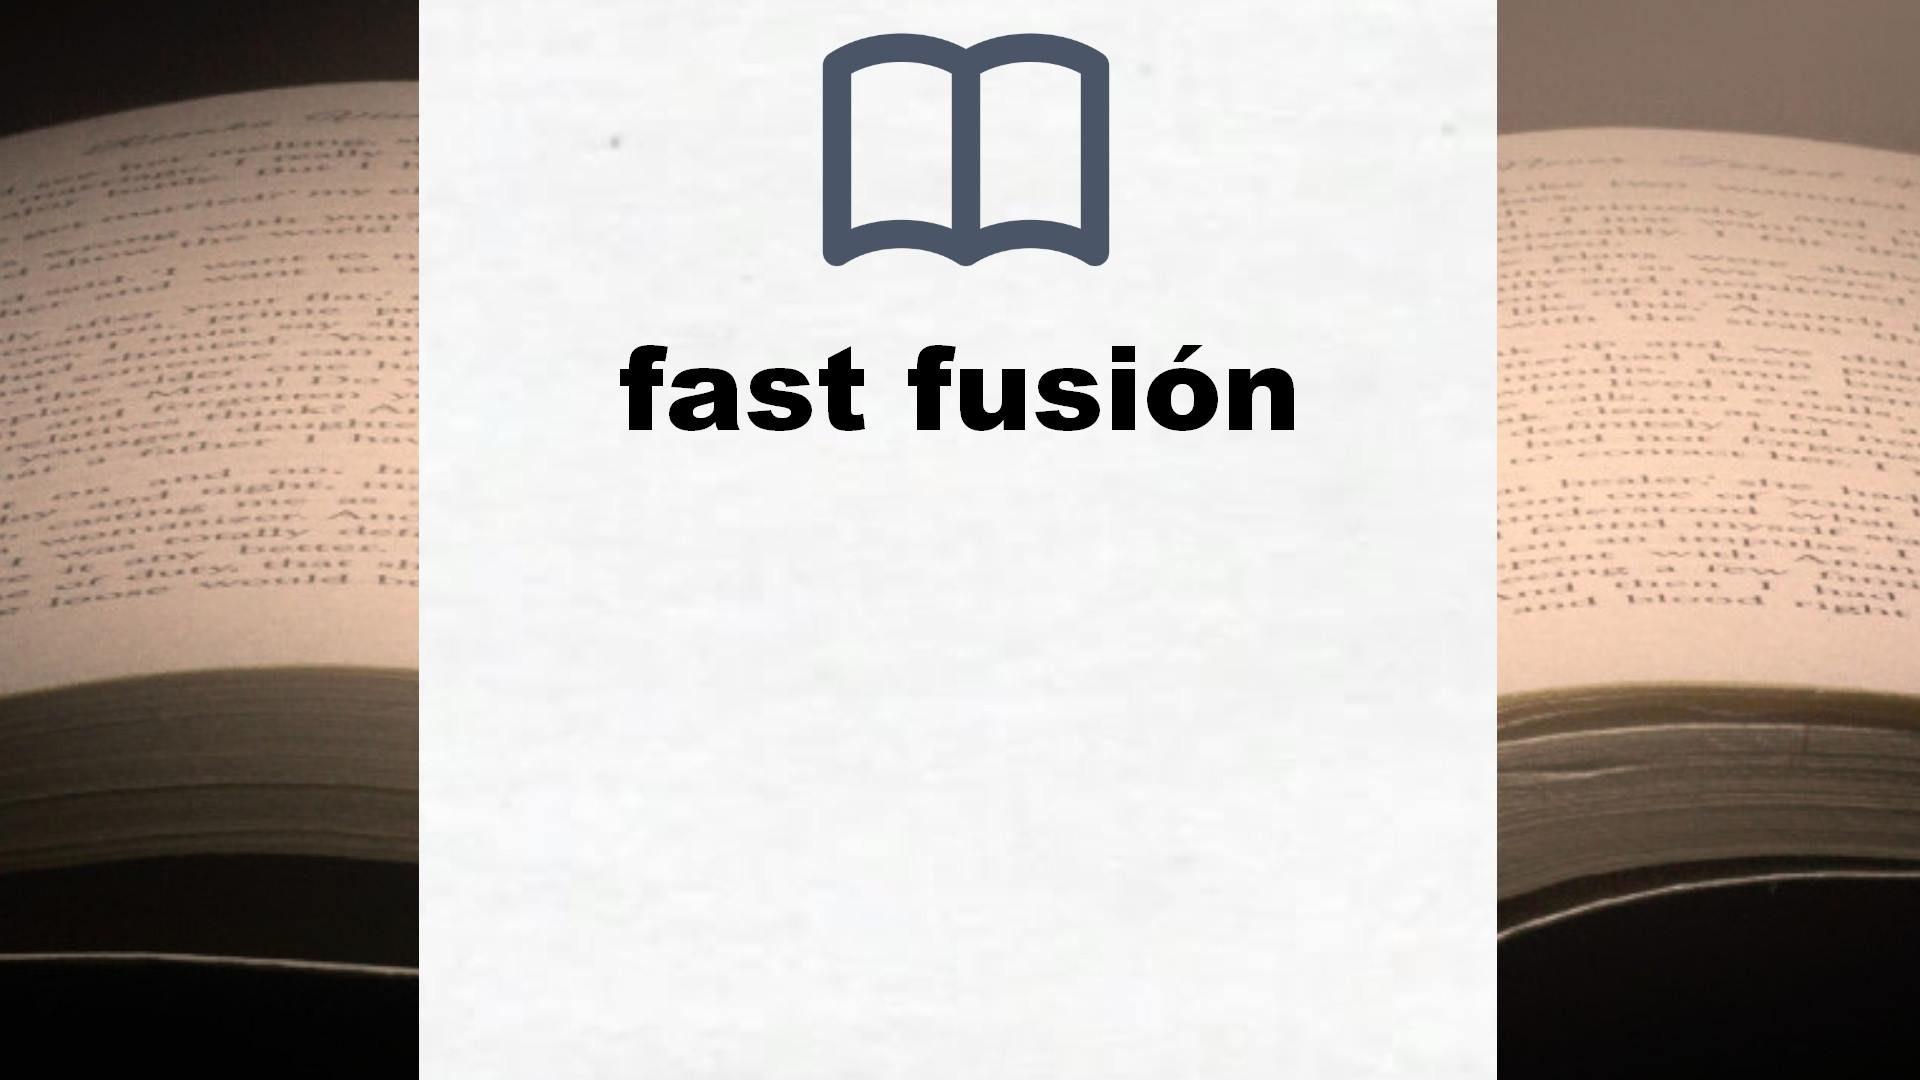 Libros sobre fast fusión